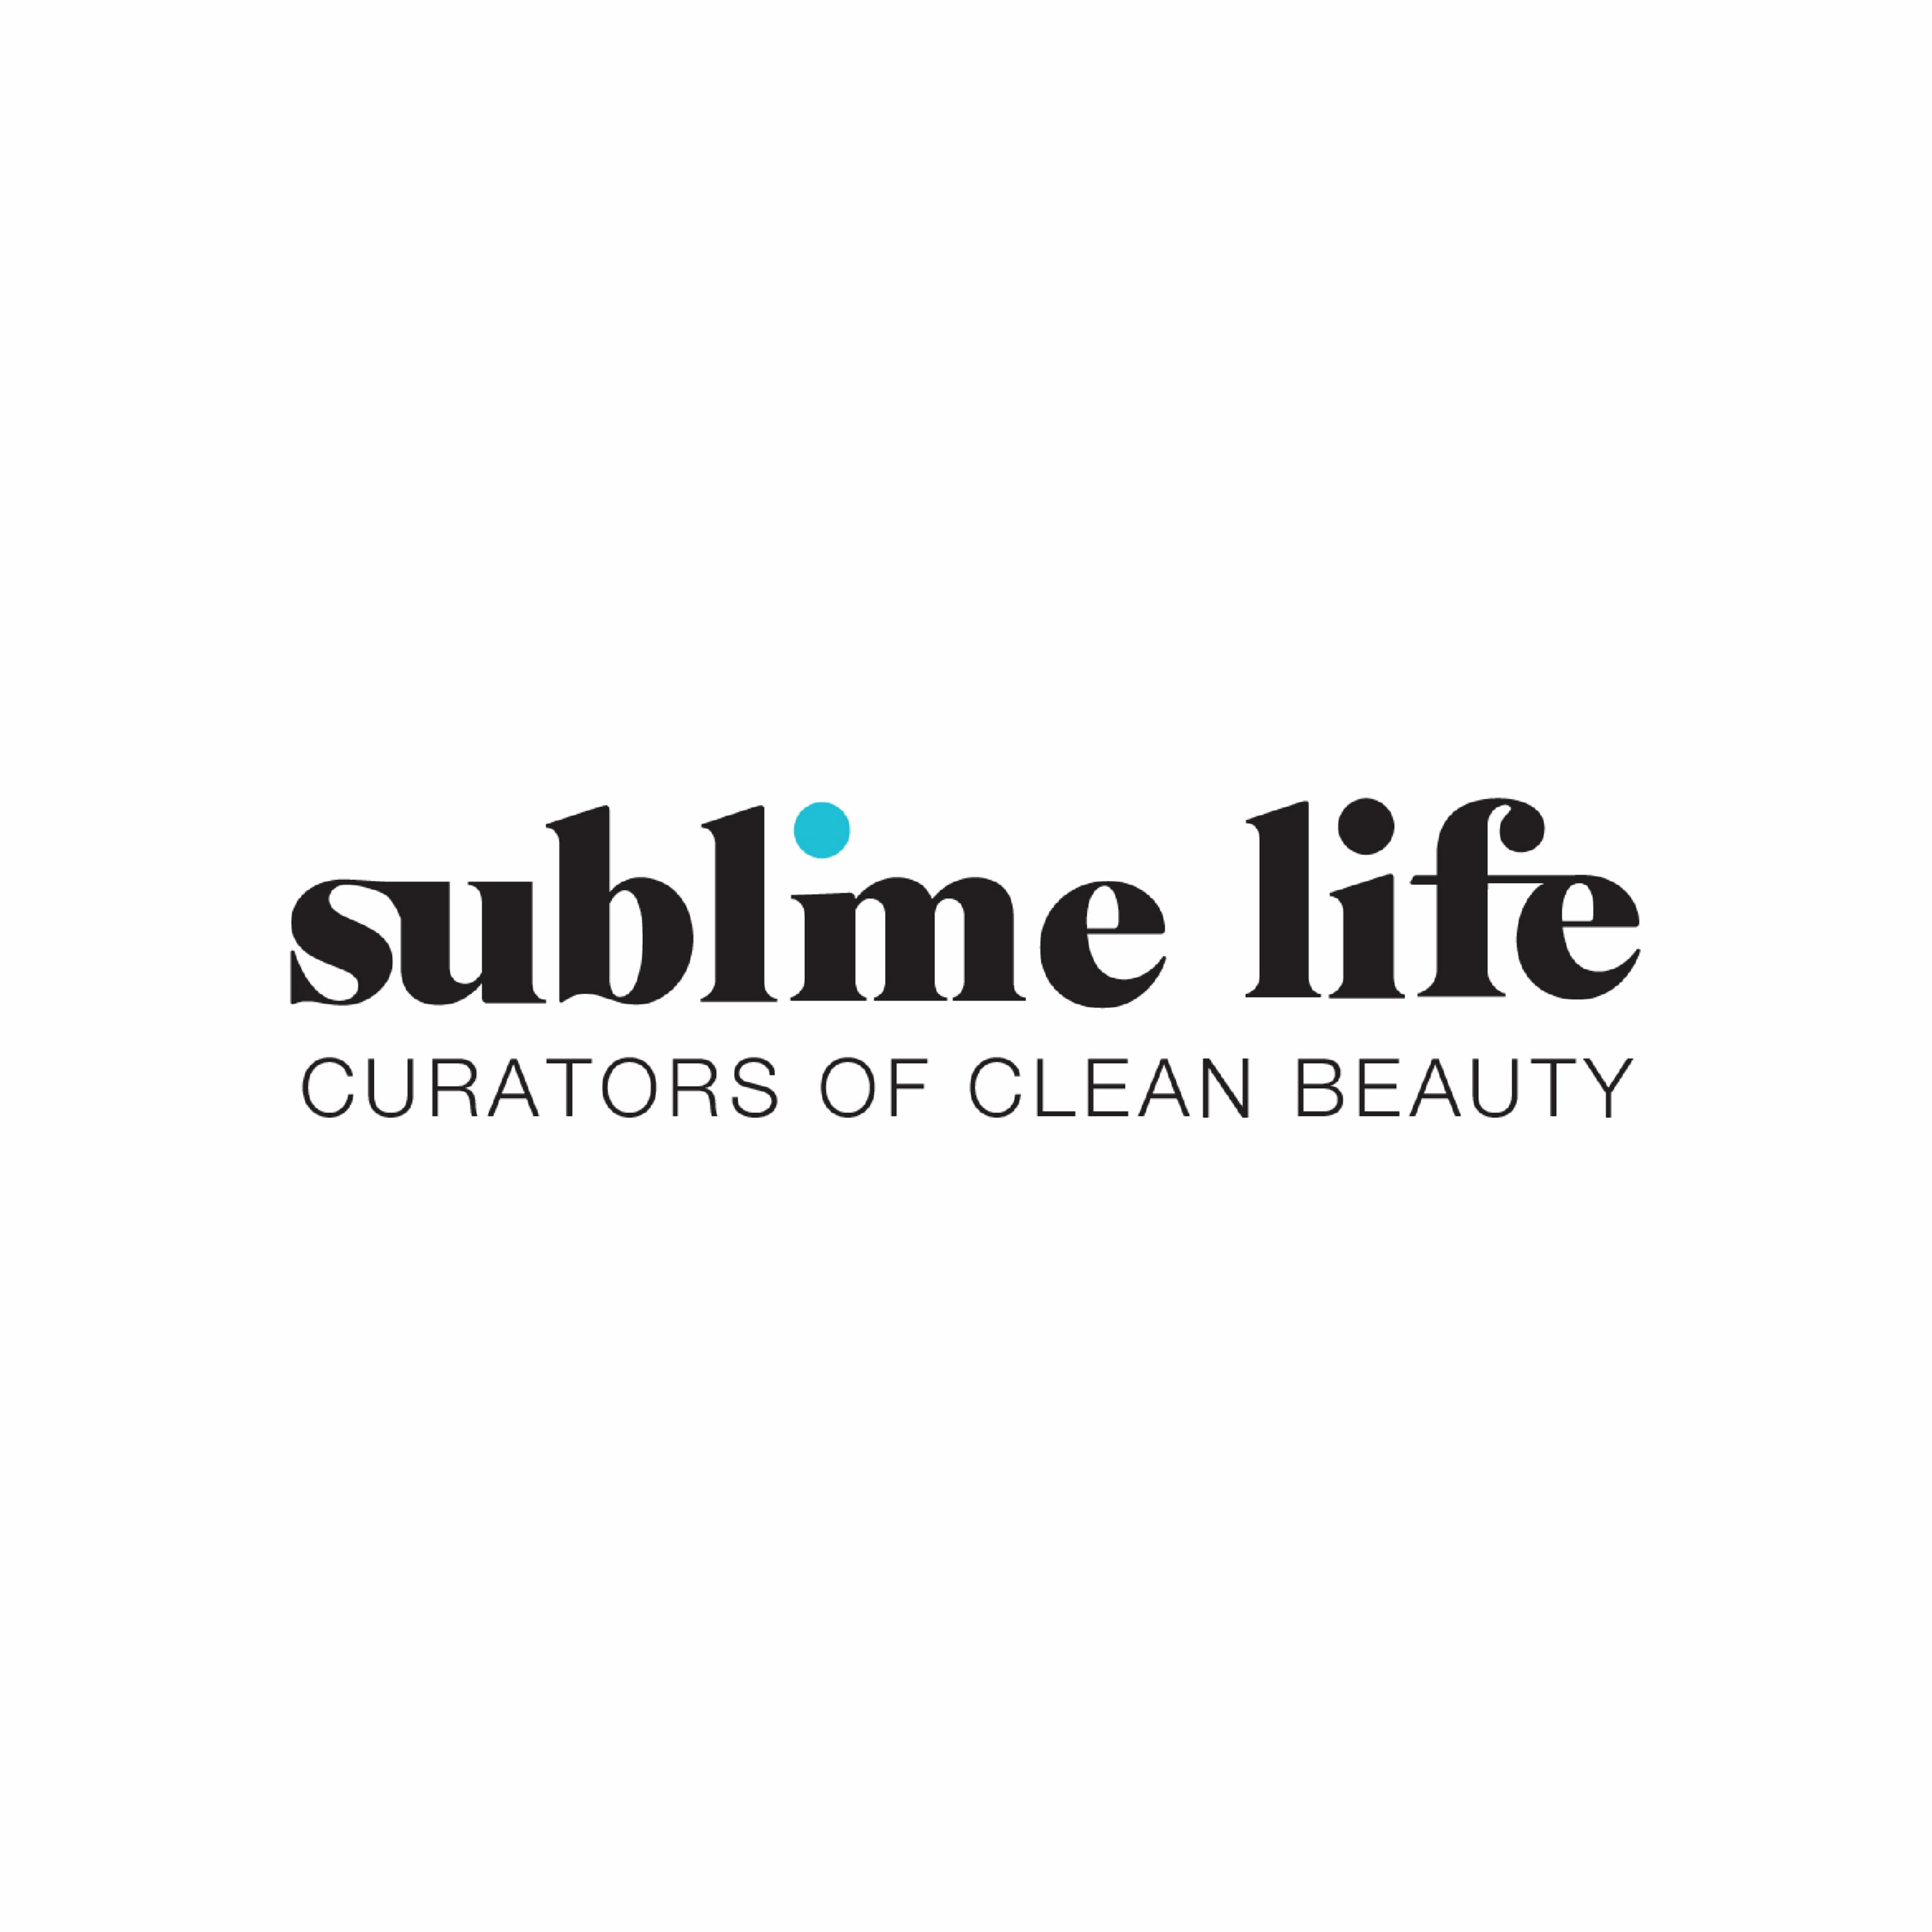 SUBLIME LIFE's logo